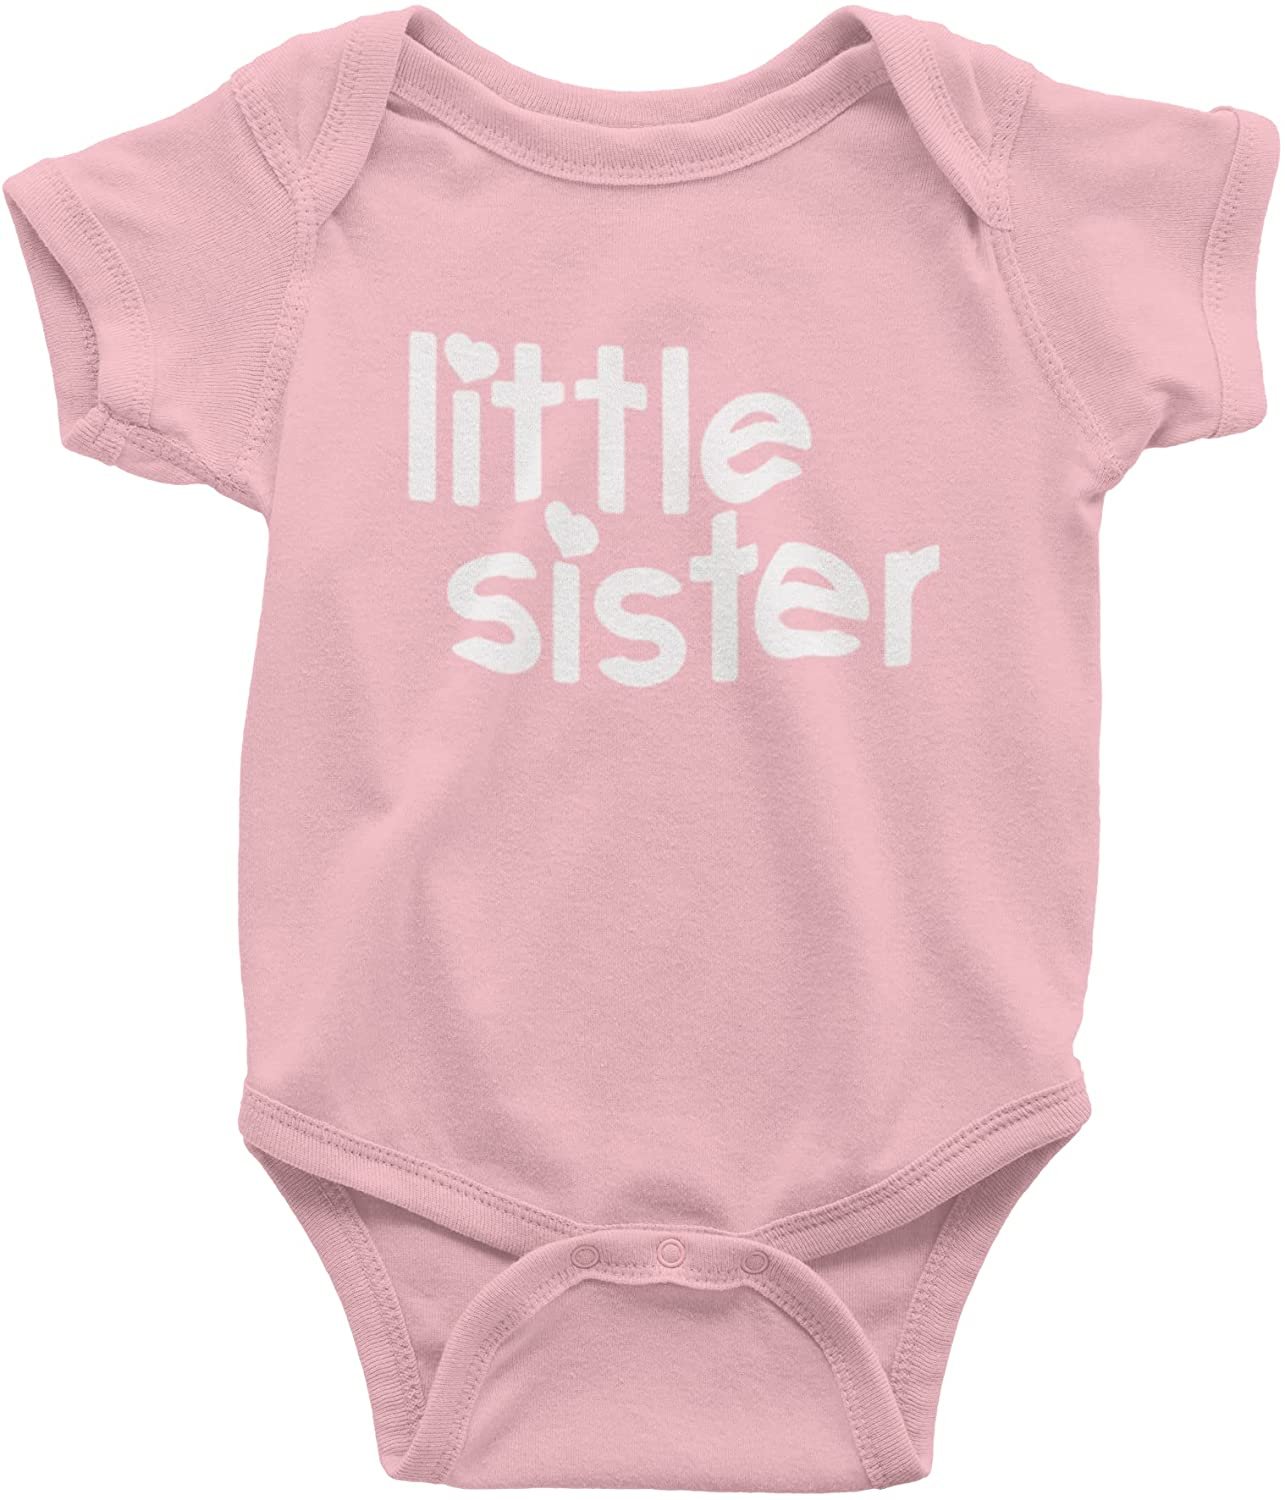 Little Sister Newborn Announcement Baby Gift Bodysuit (Pink)